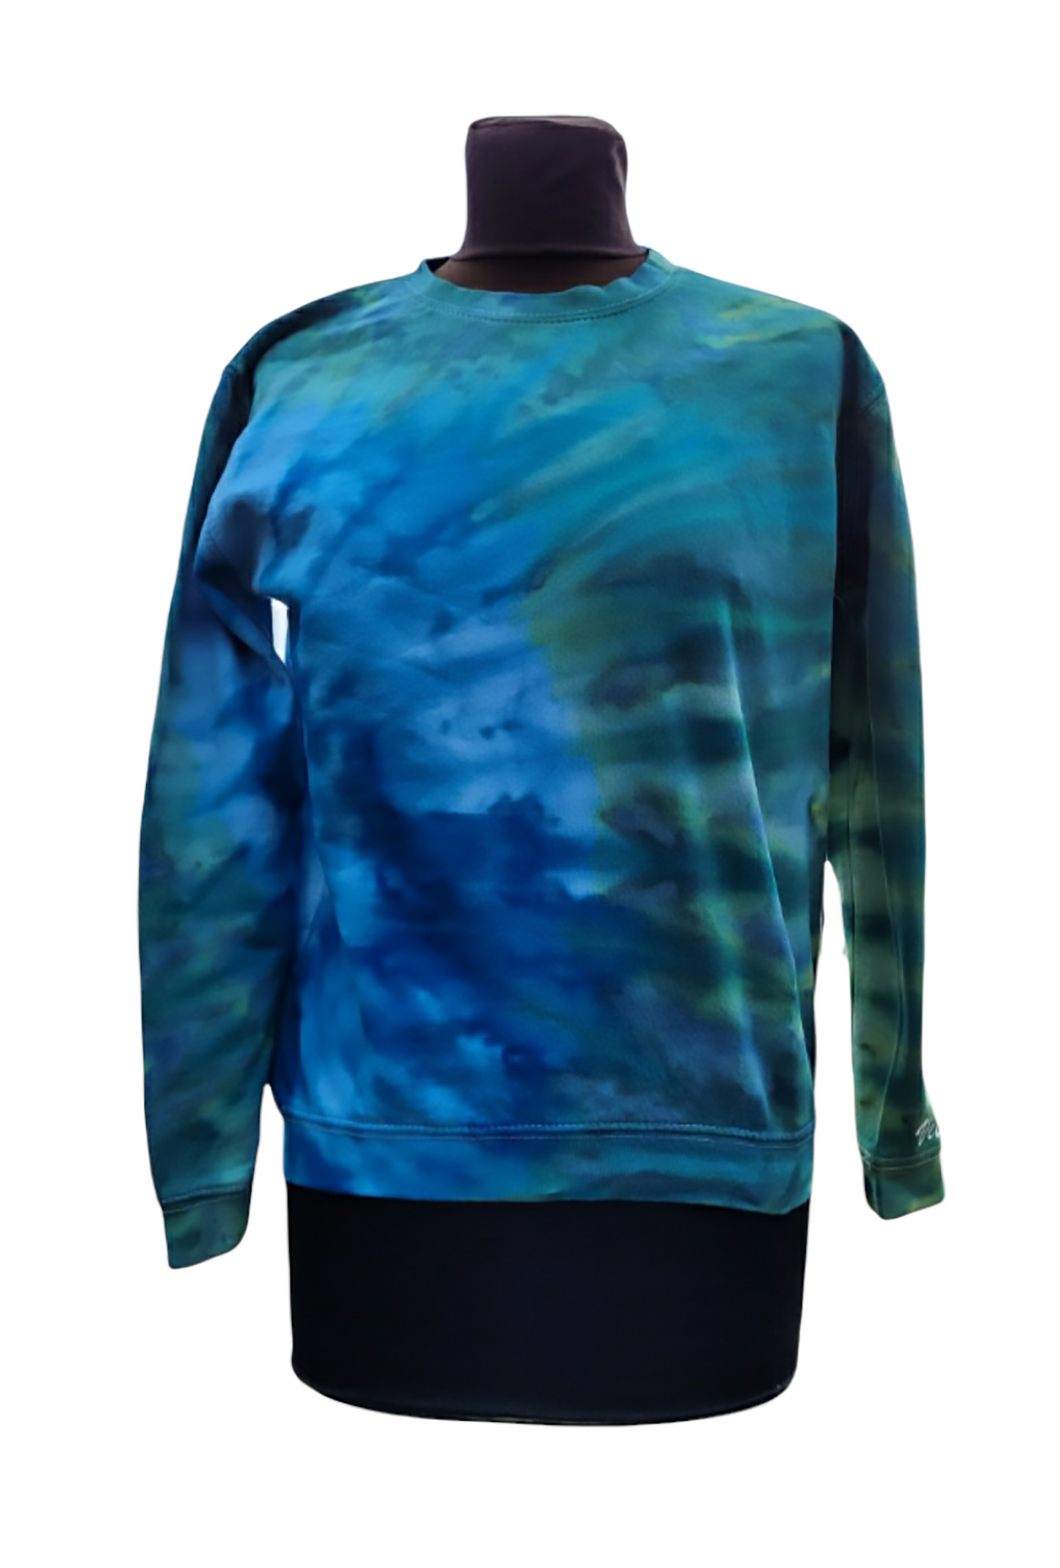 Incline sweatshirt - Ice tie dye unisex sweatshirt (adult & children sizes) - Customisable colours